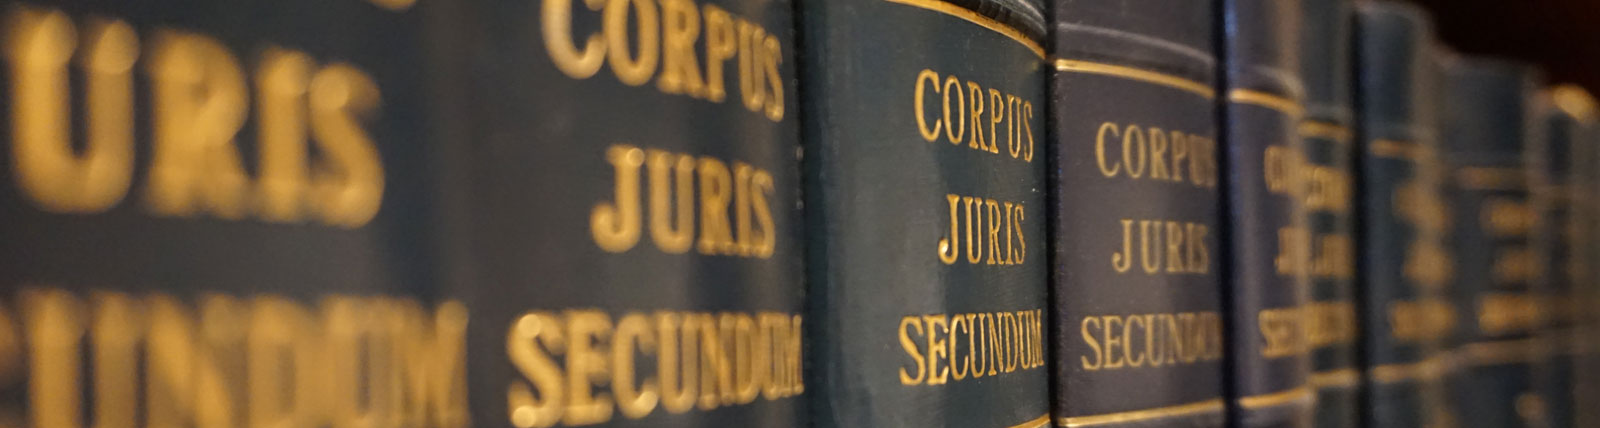 Corpus Juris Secundum law books